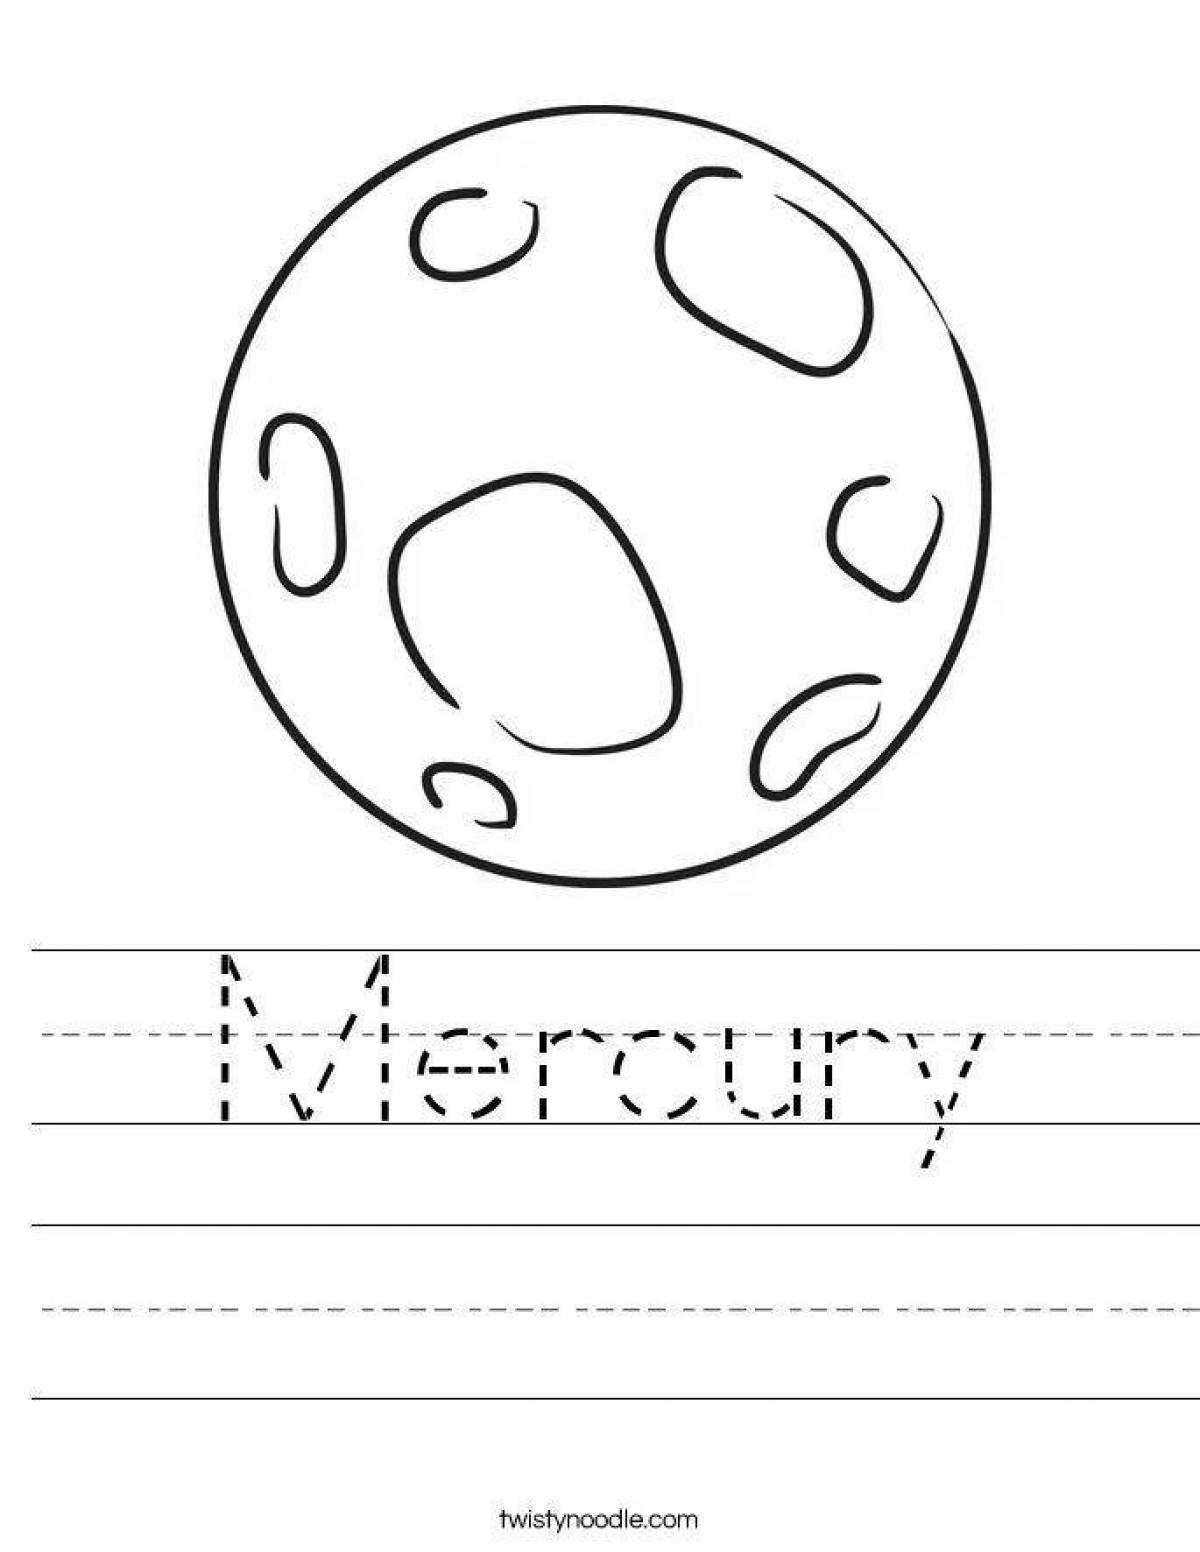 Меркурий раскраска